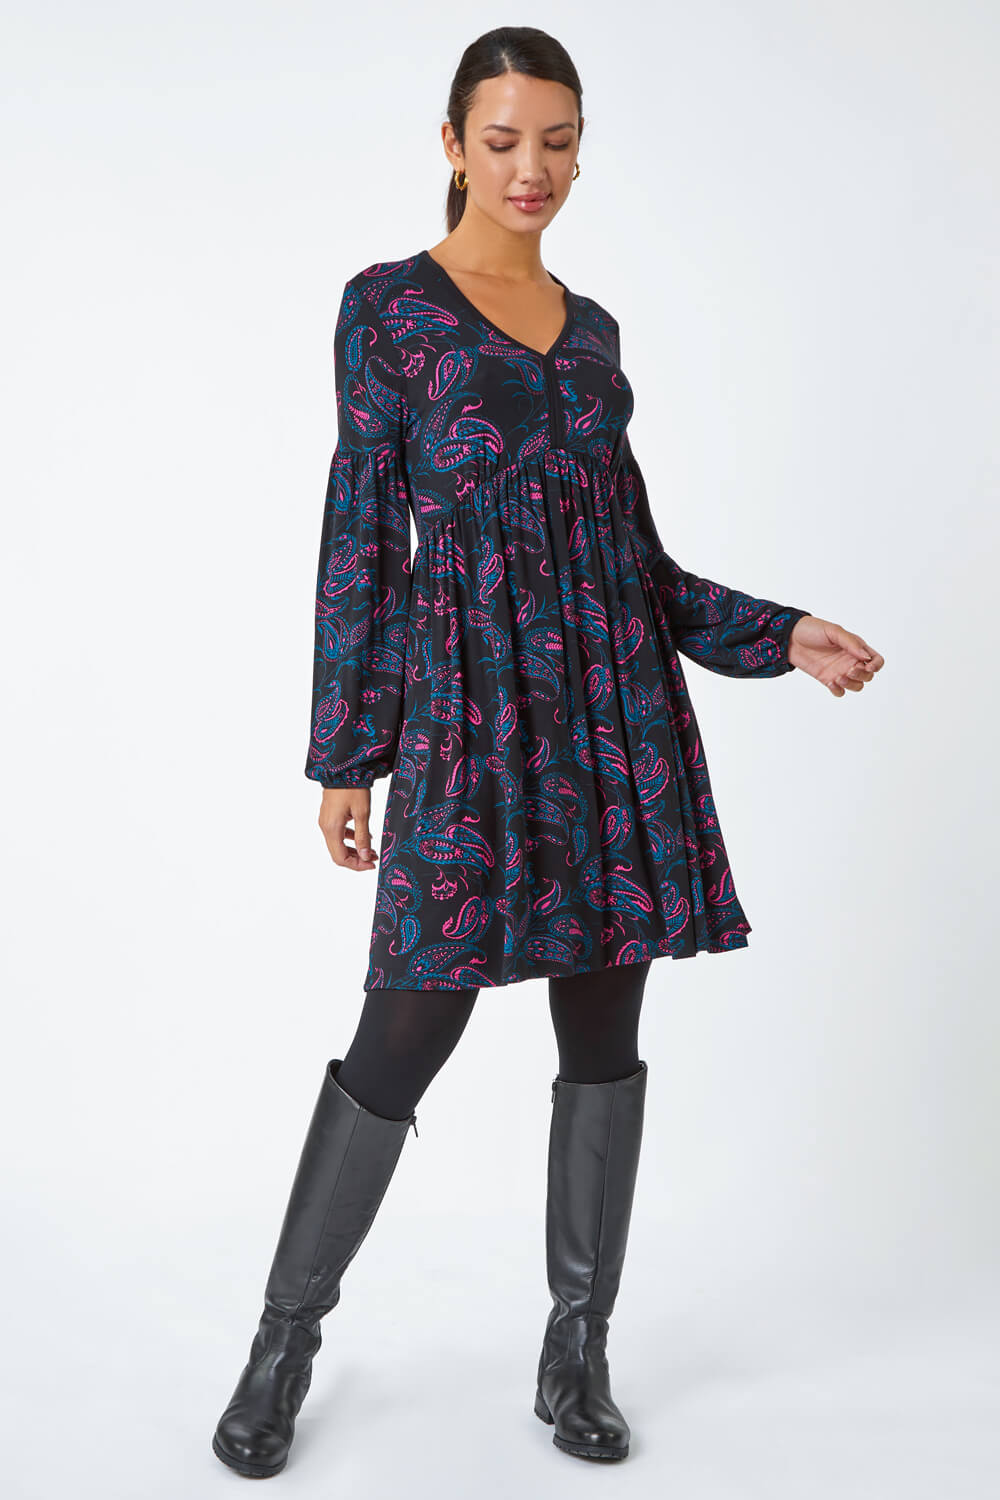 Black Paisley Print Stretch Jersey Dress, Image 2 of 5